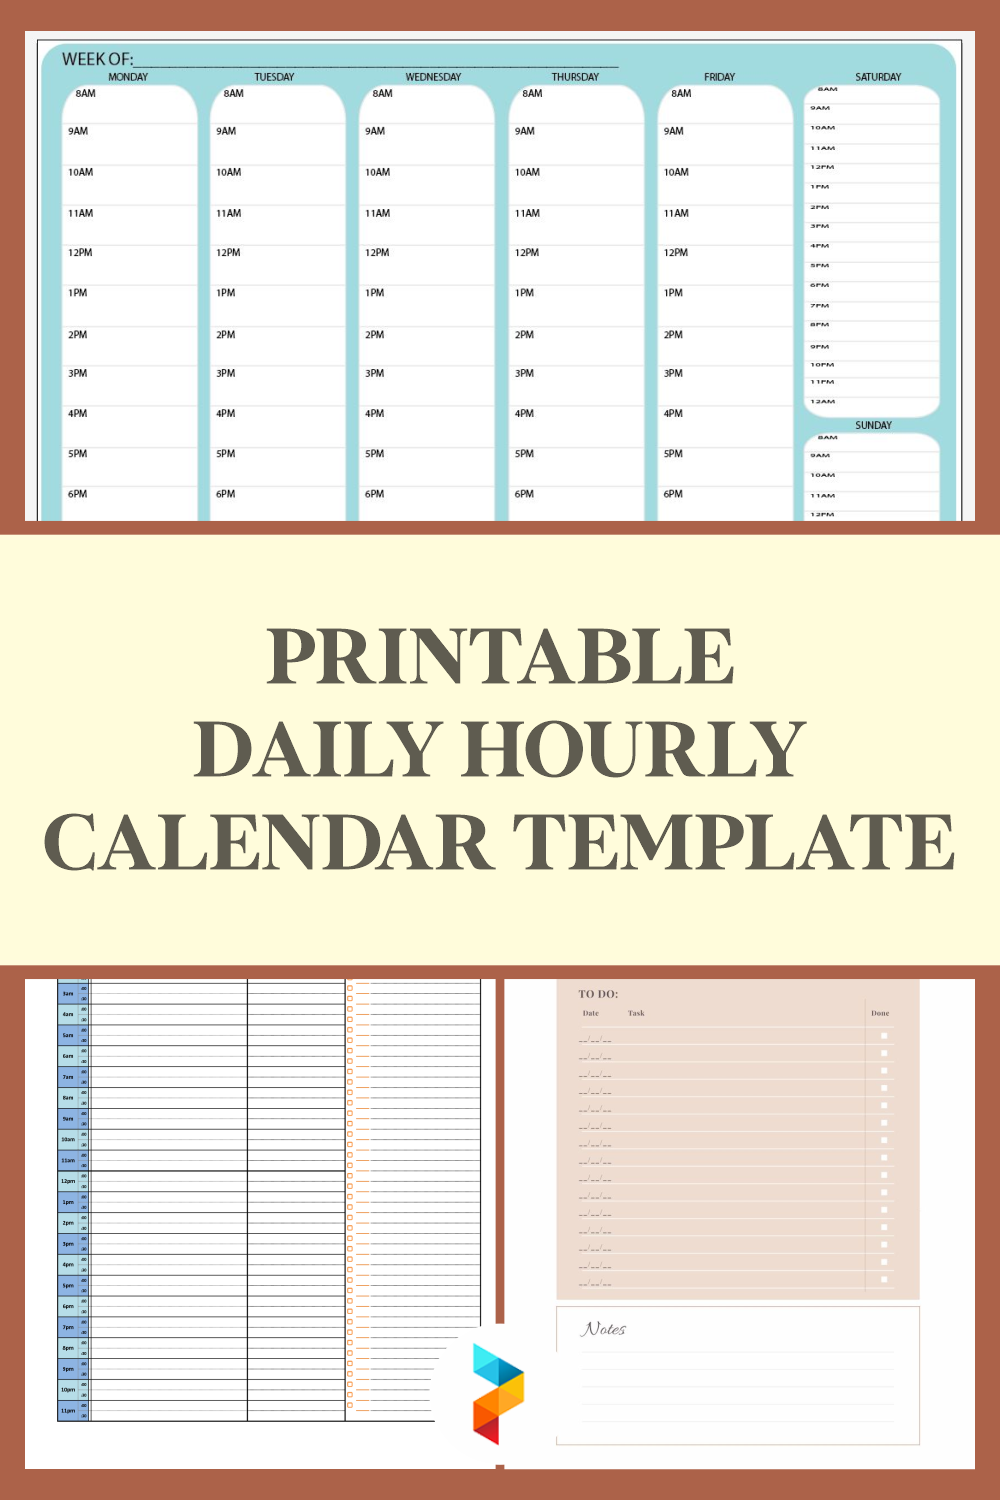 Printable Daily Hourly Calendar Template